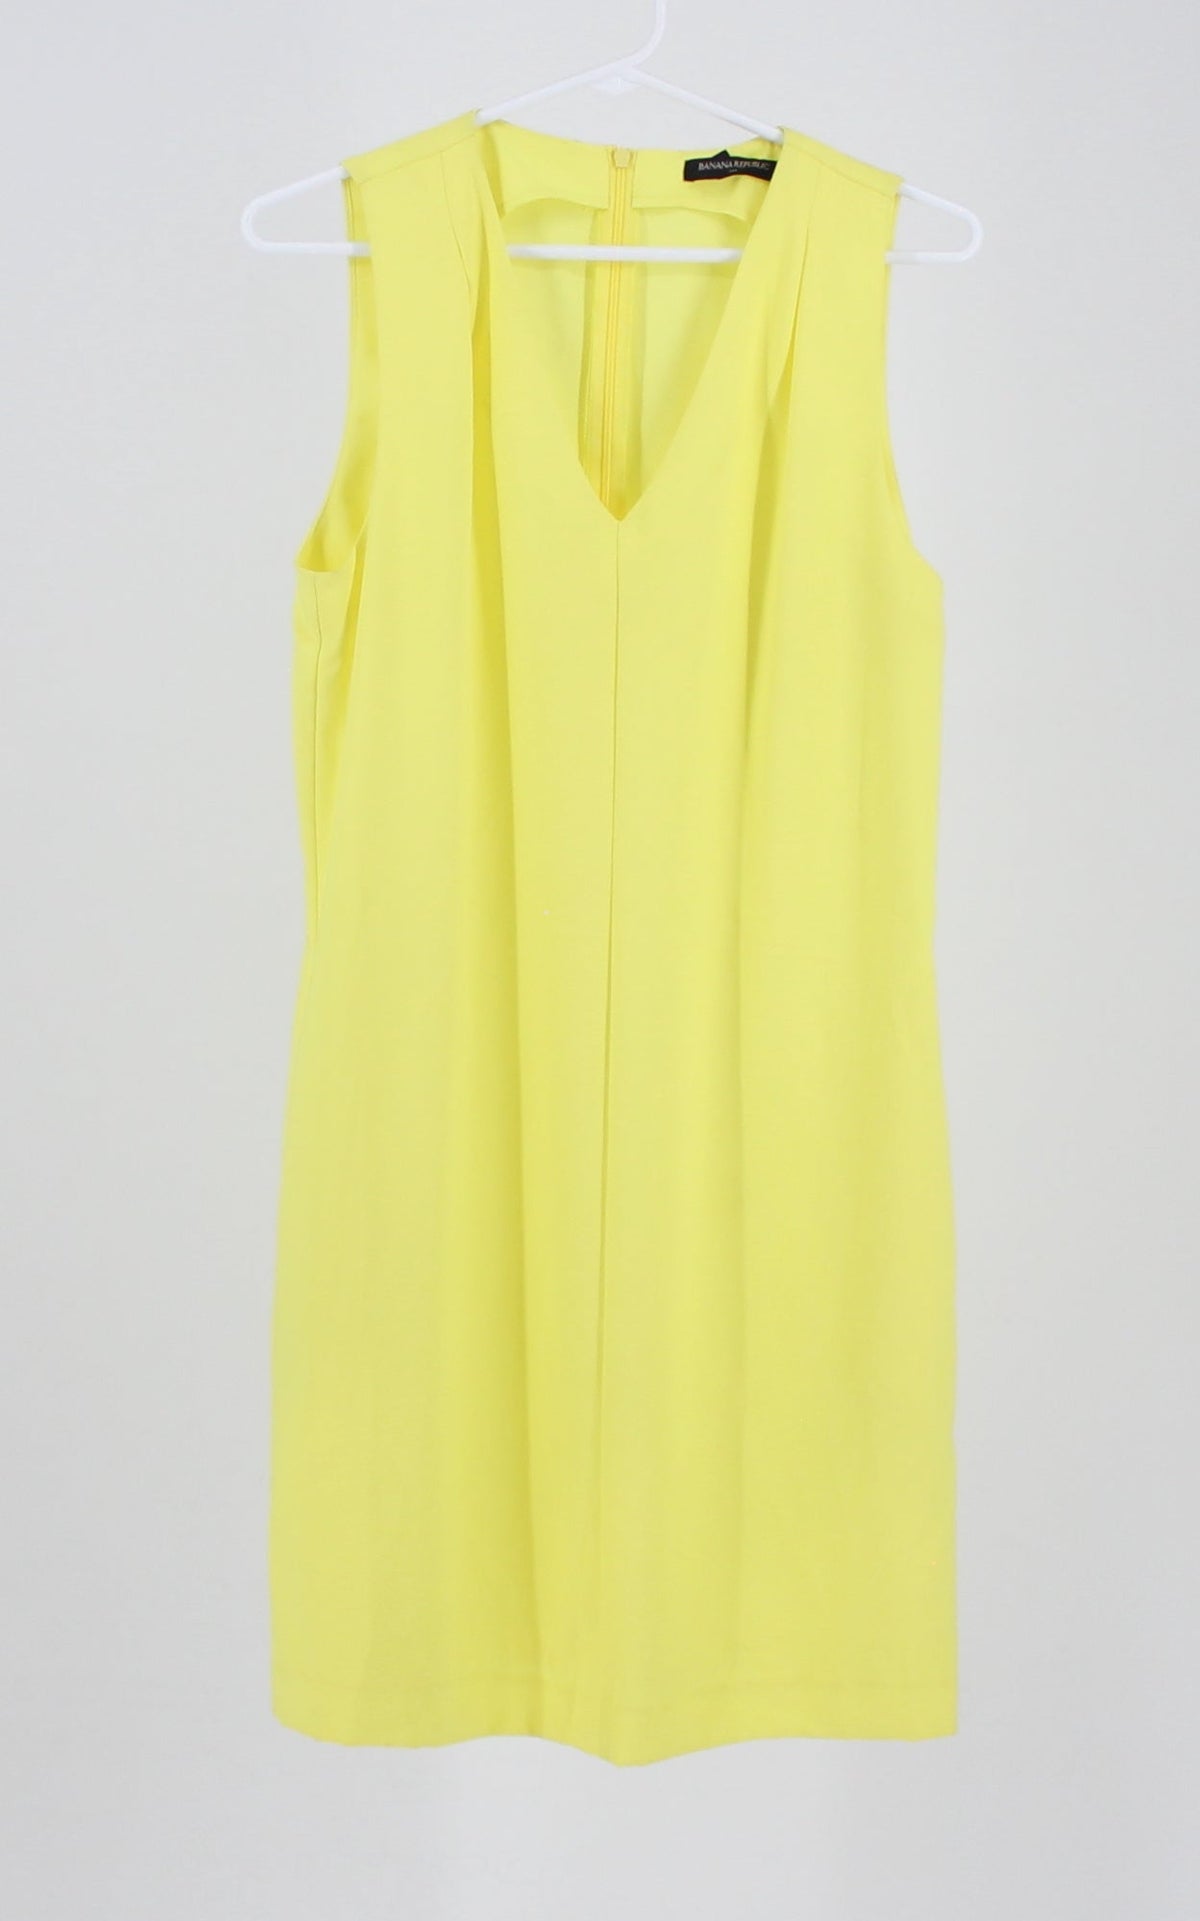 Banana Republic neon yellow V neck dress